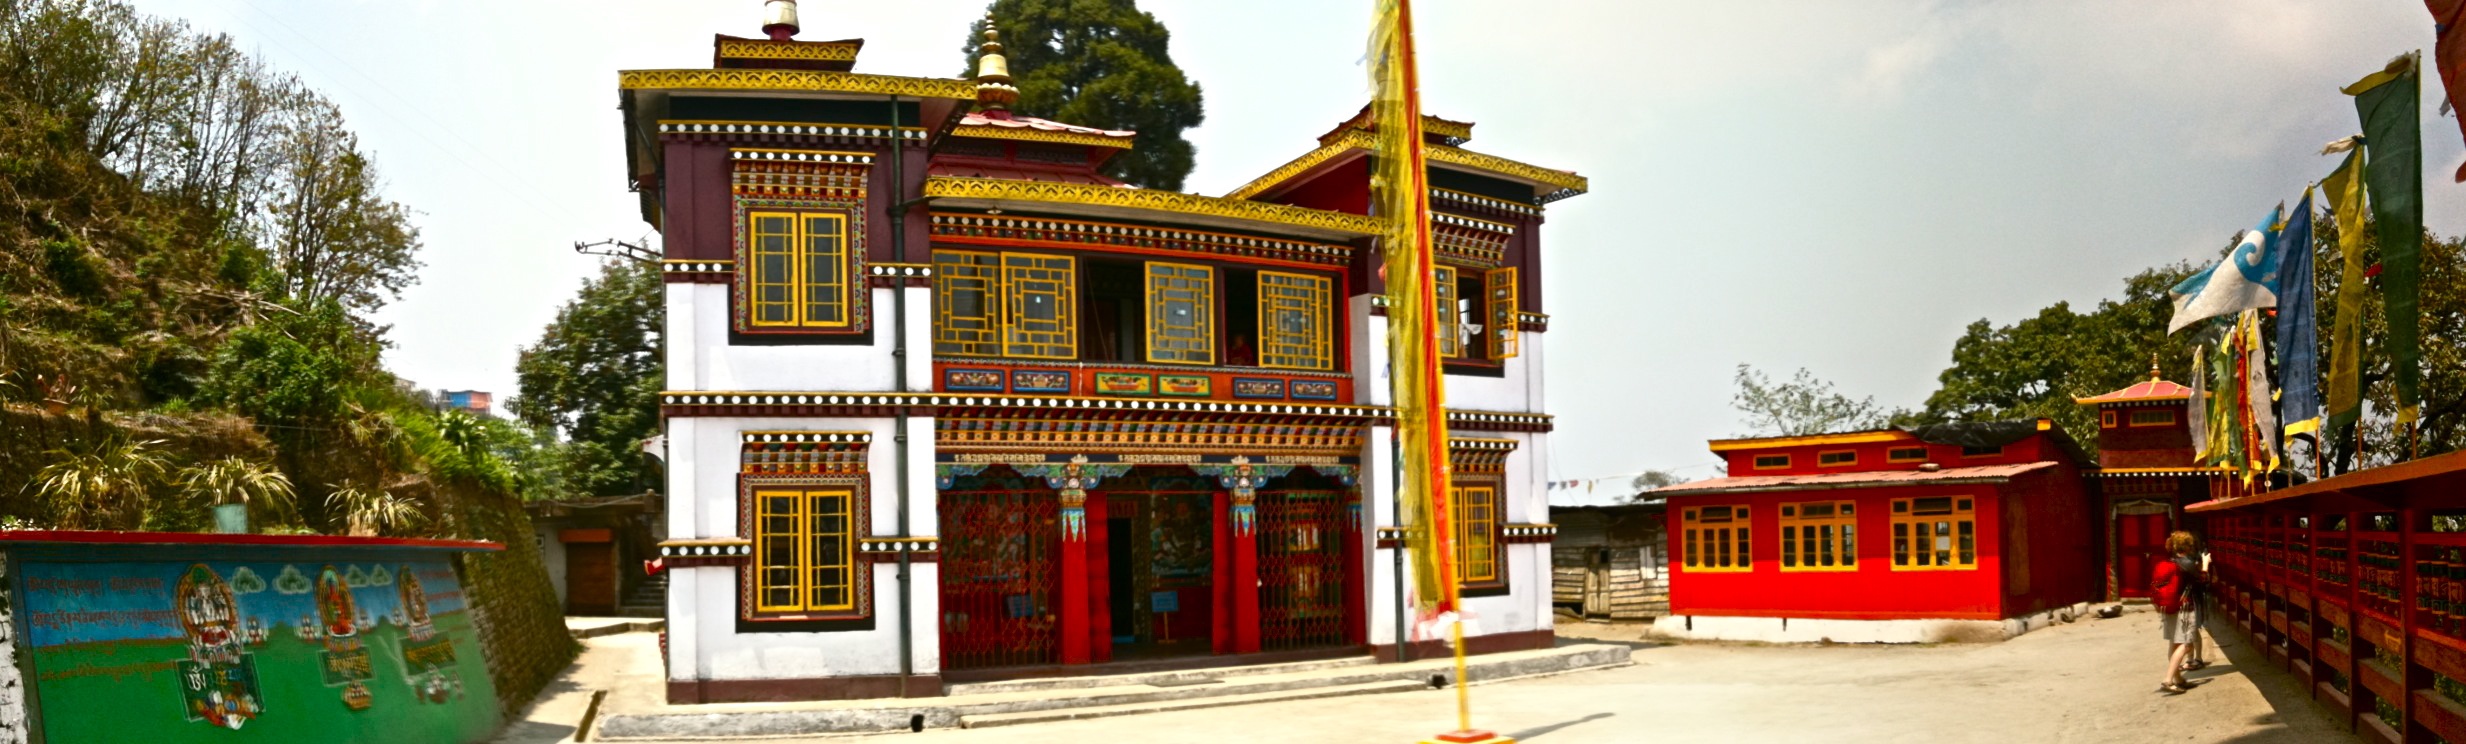 Bhutia Busty Monestary, Darjeeling